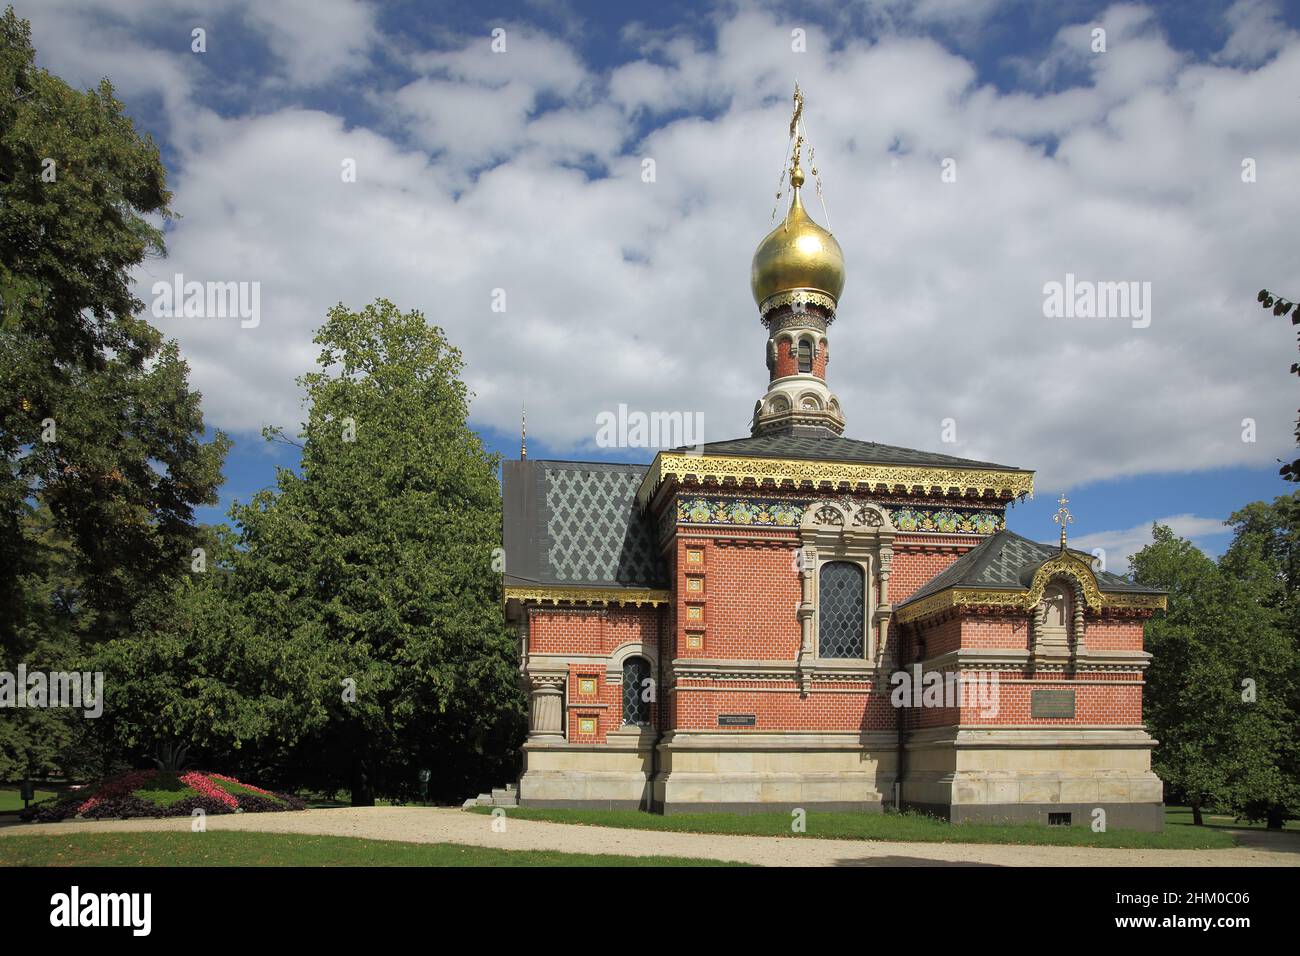 Chiesa ortodossa russa nel Kupark a Bad Homburg, Assia, Germania Foto Stock